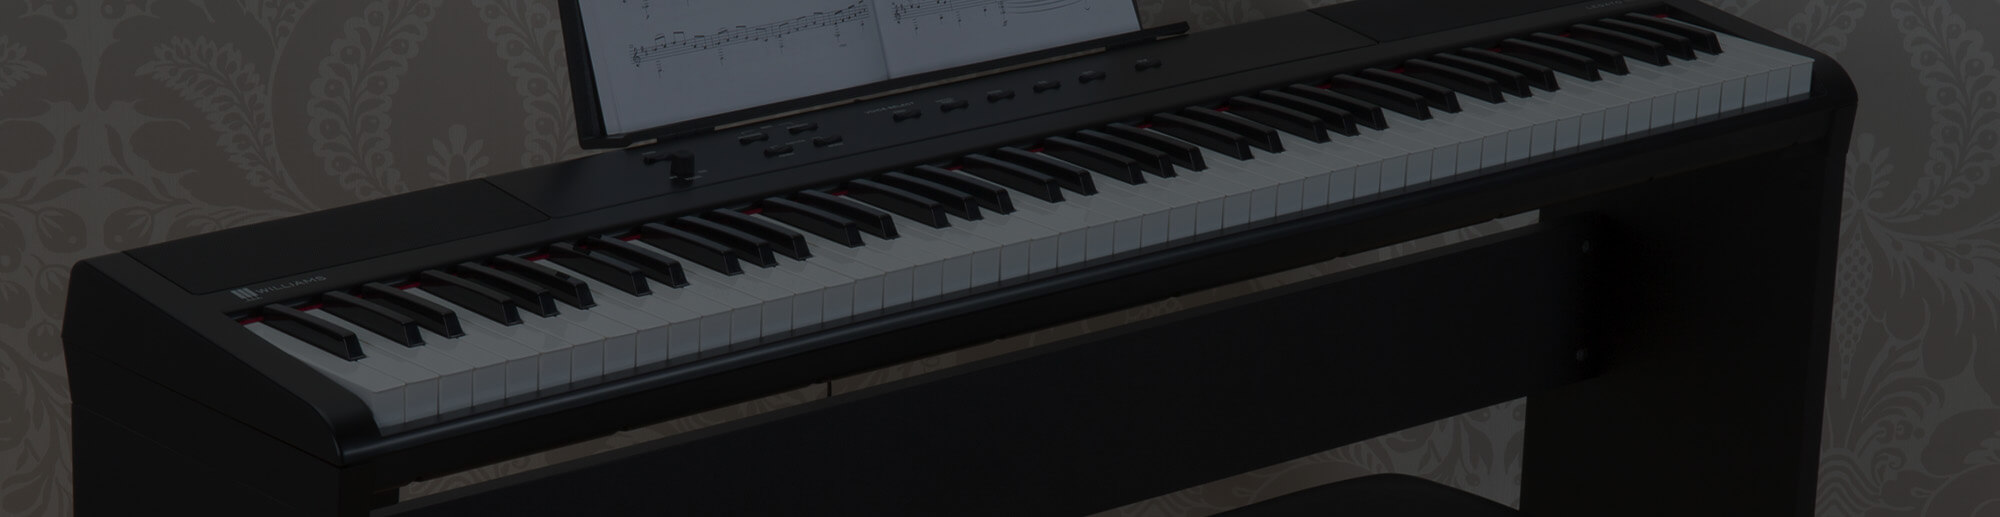 Williams Allegro III digital piano.